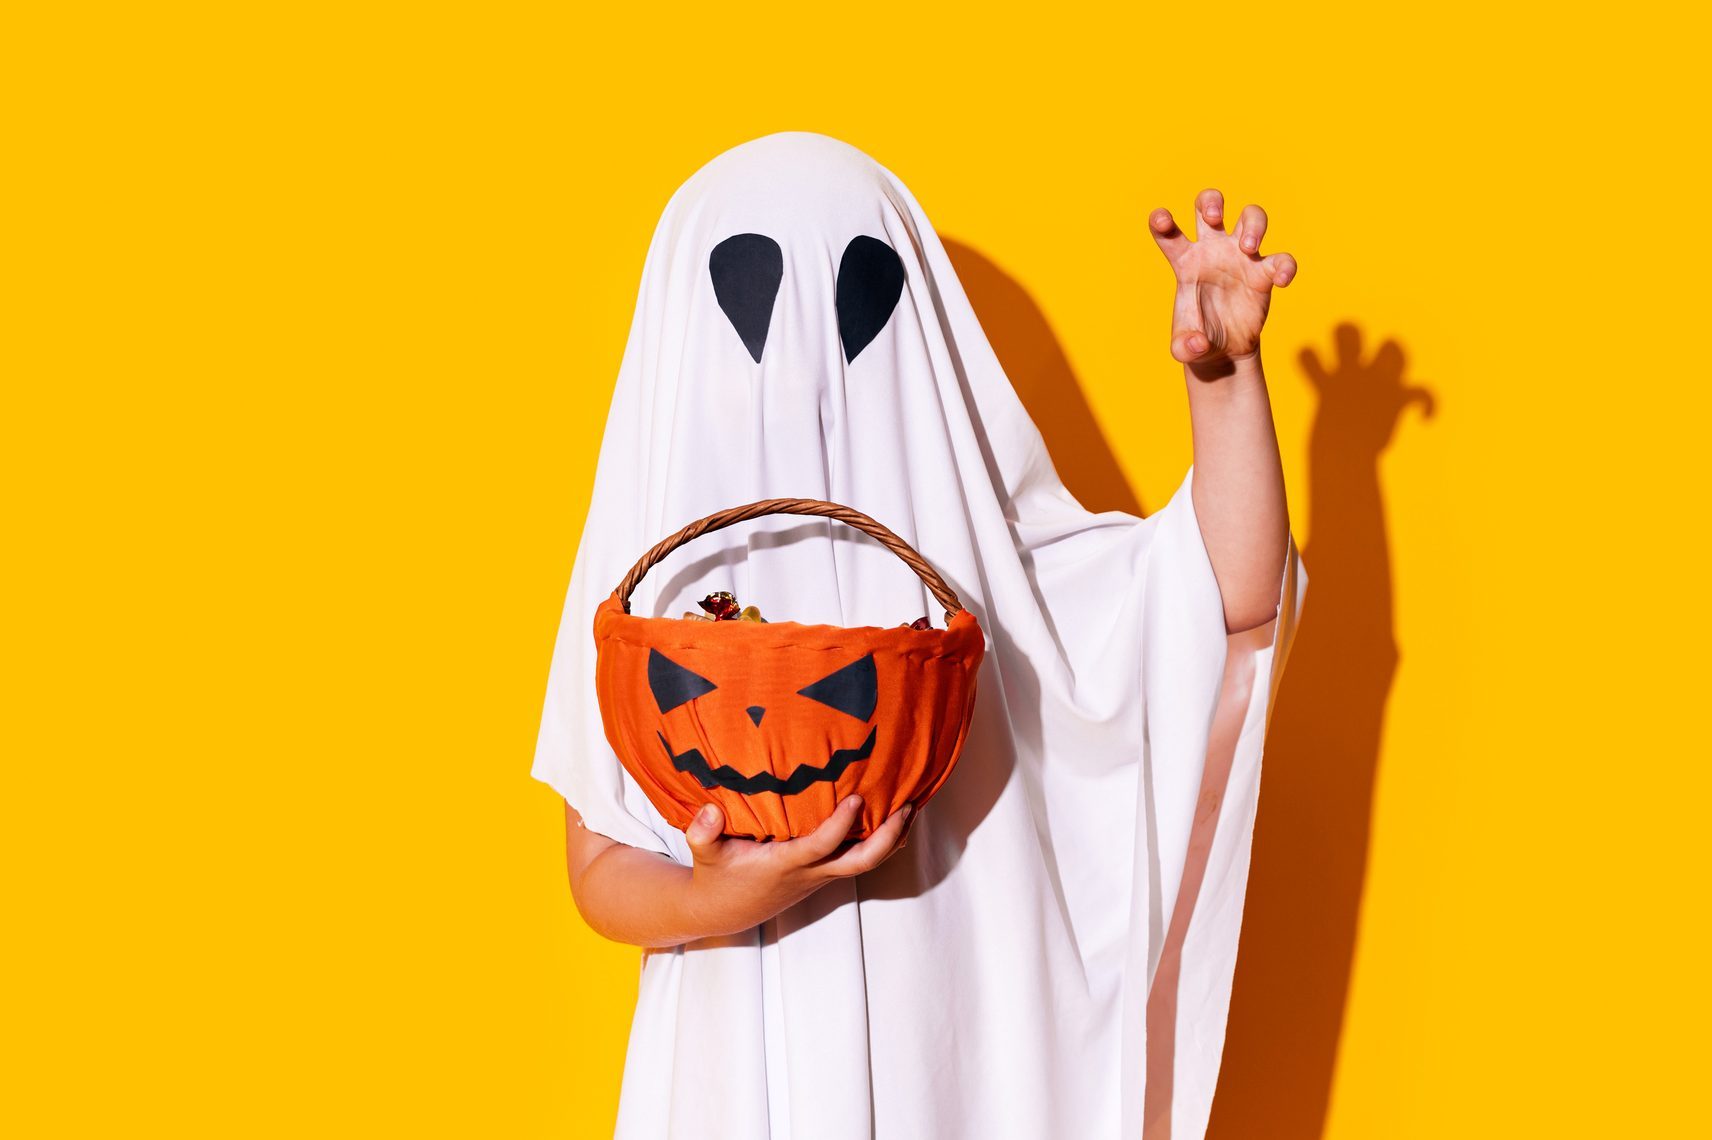 Halloween, Definition, Origin, History, & Facts